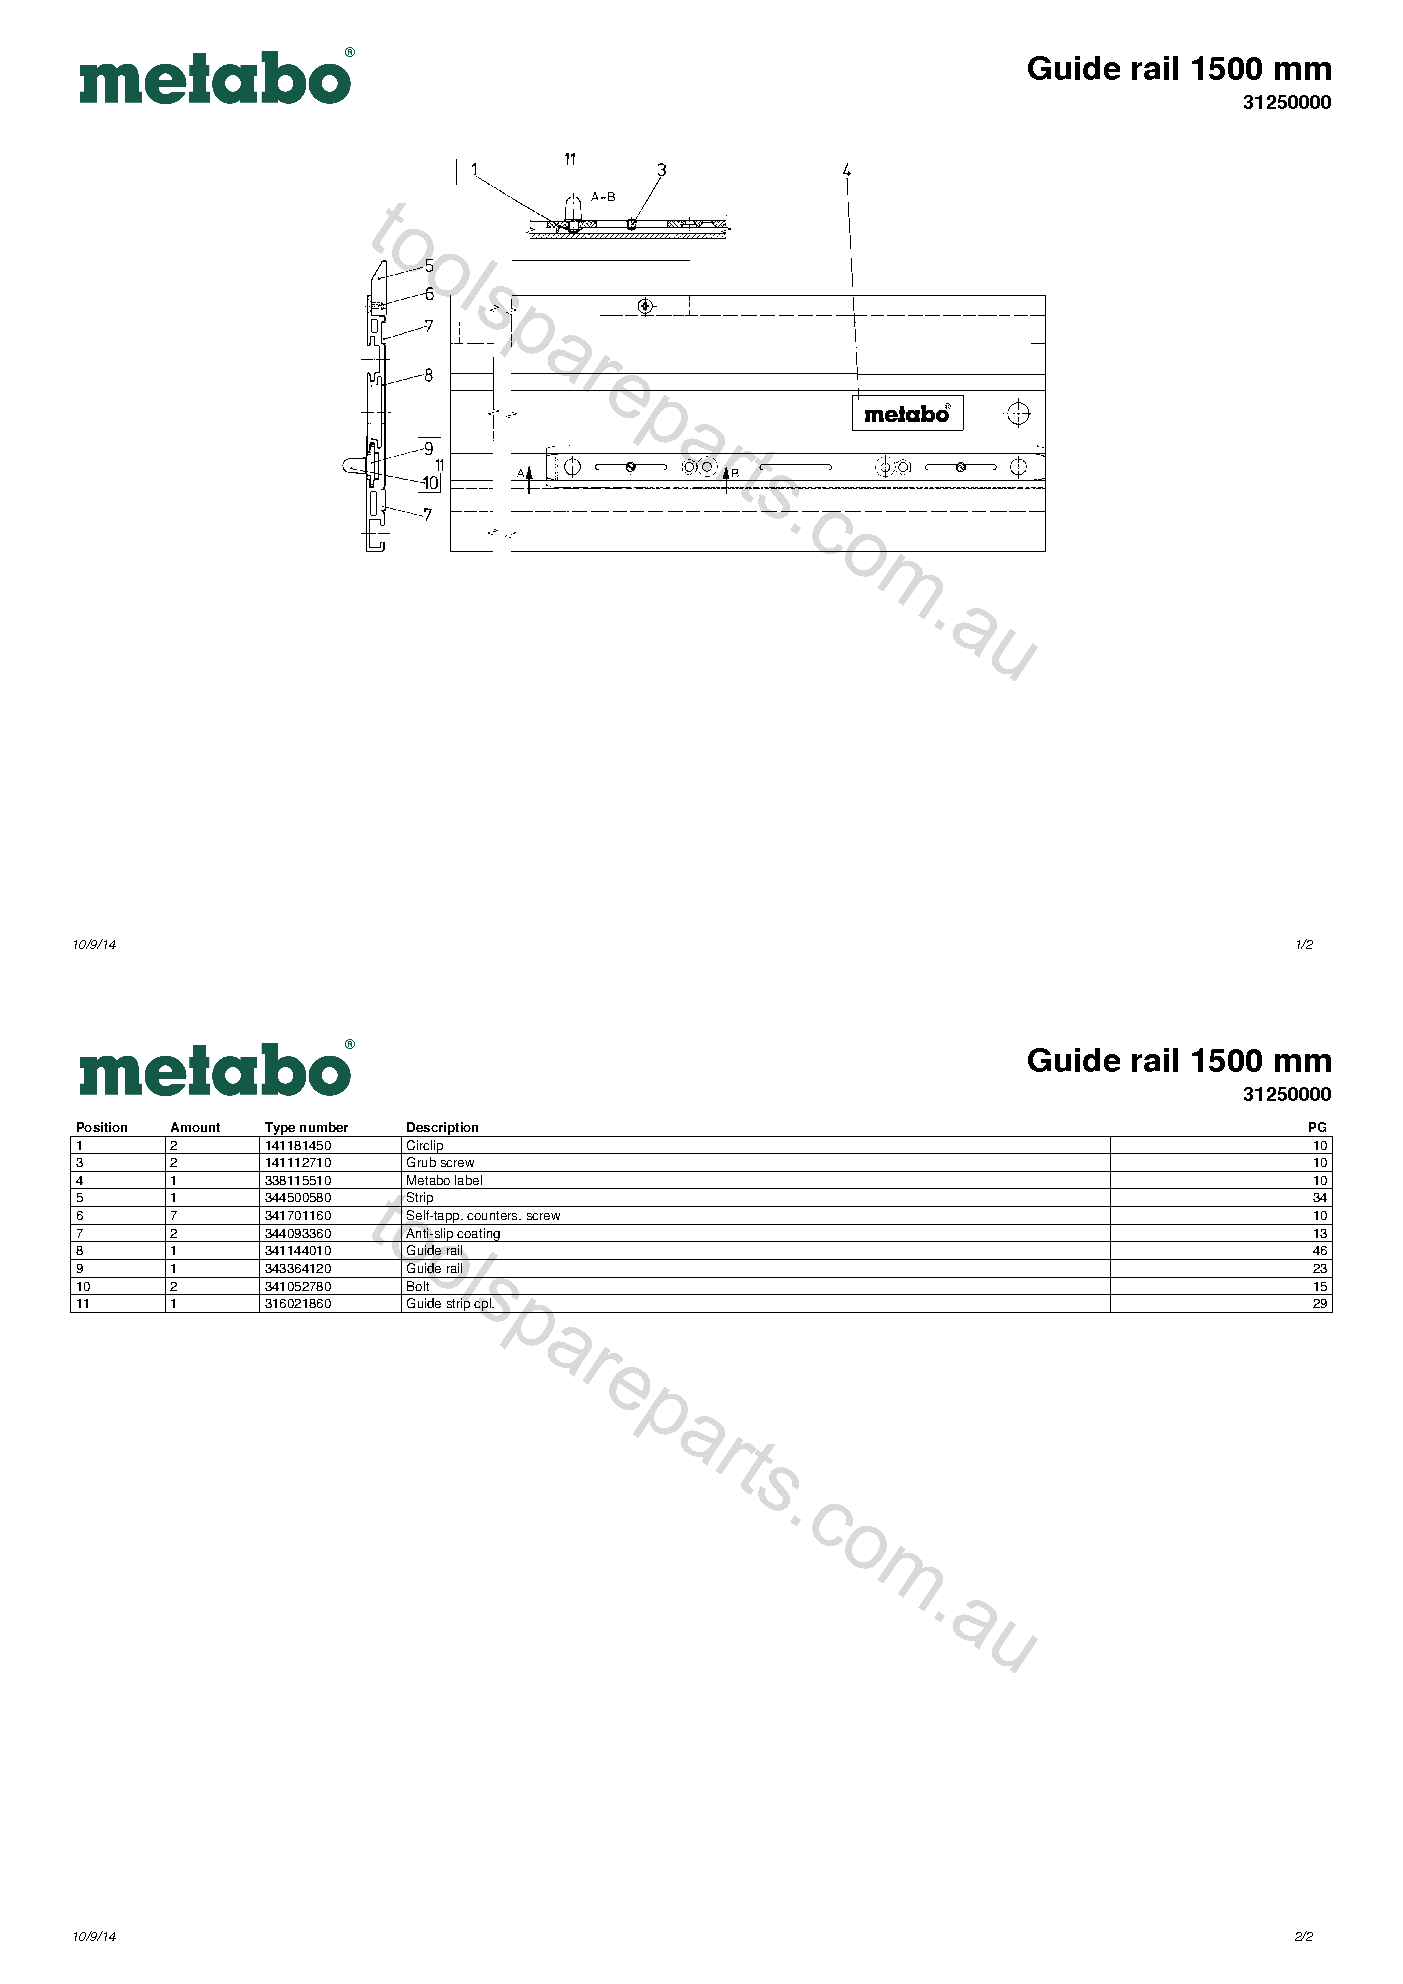 Metabo Guide rail 1500 mm 31250000  Diagram 1